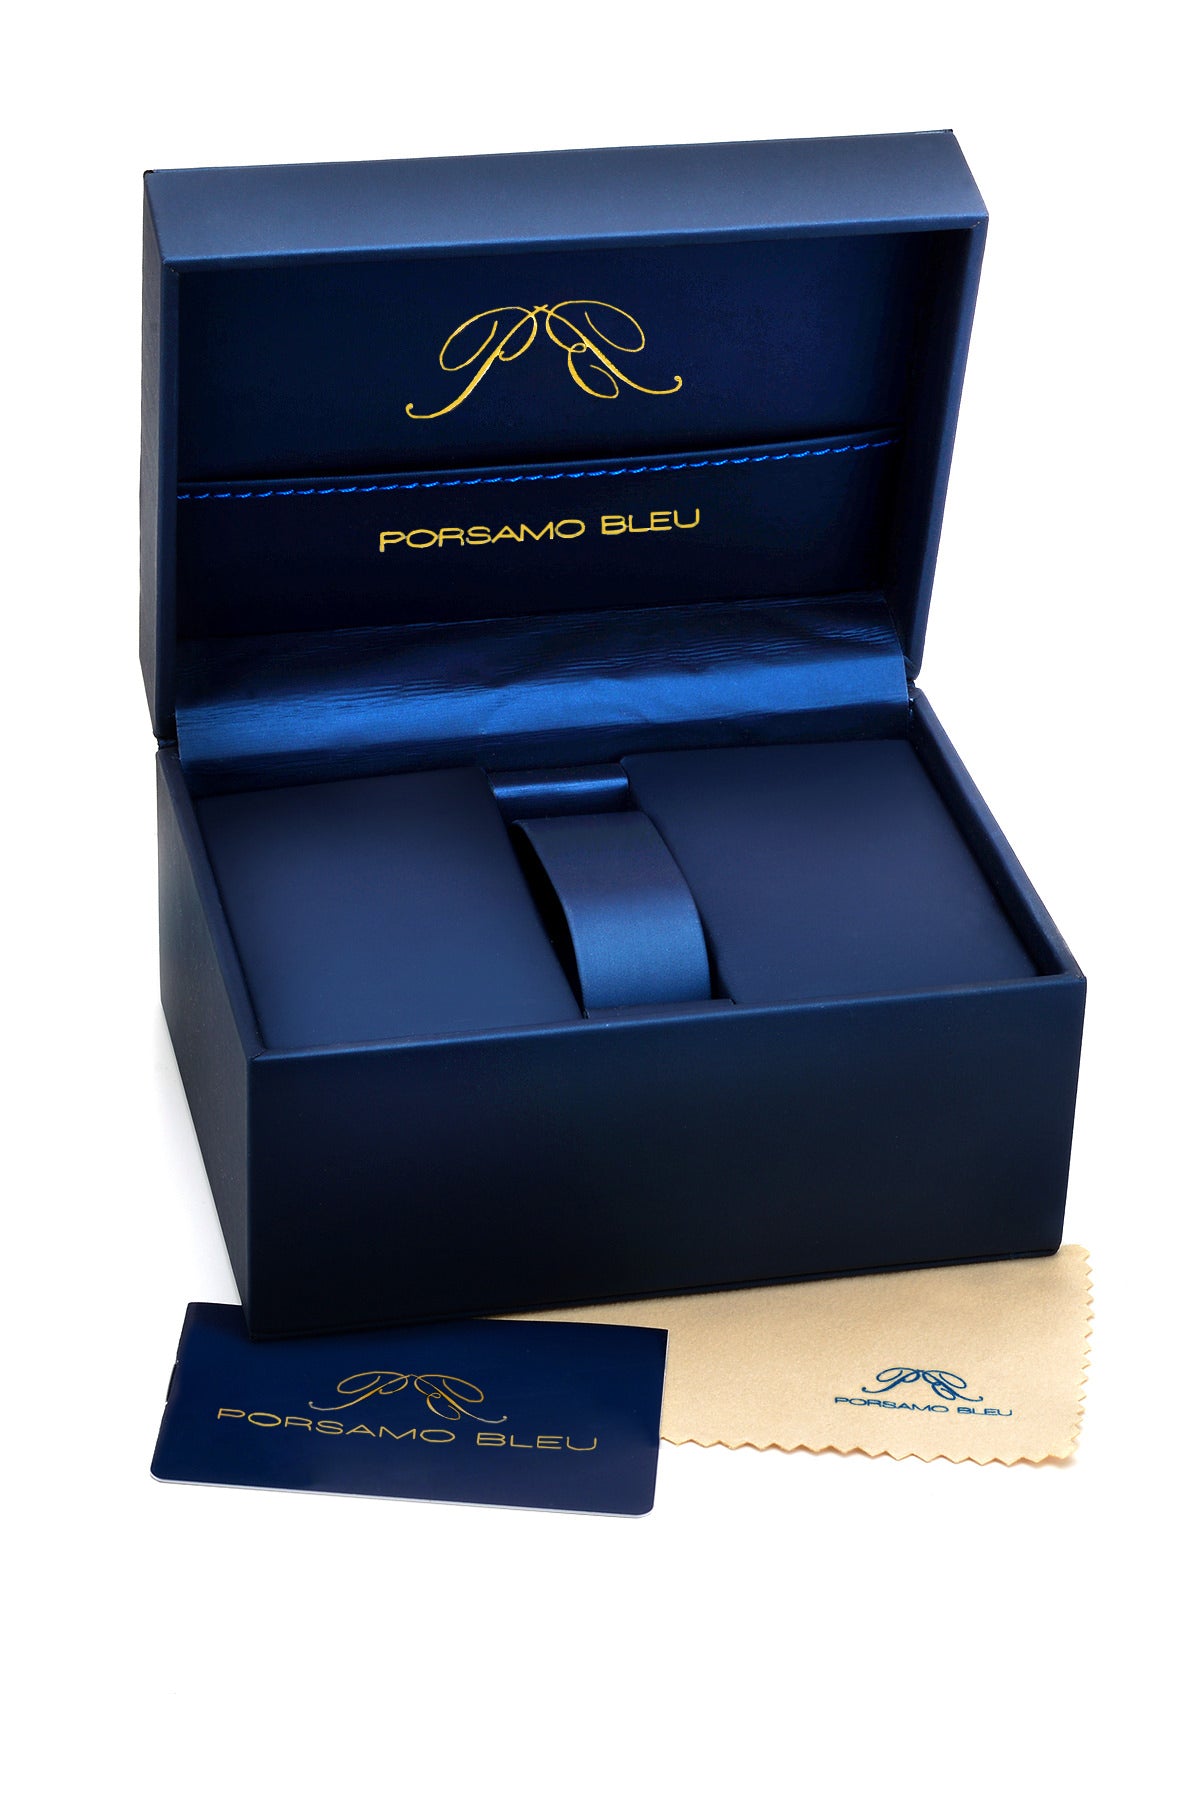 Porsamo Bleu Connor luxury chronograph men's watch, genuine leather band, gold, black 422BCOL